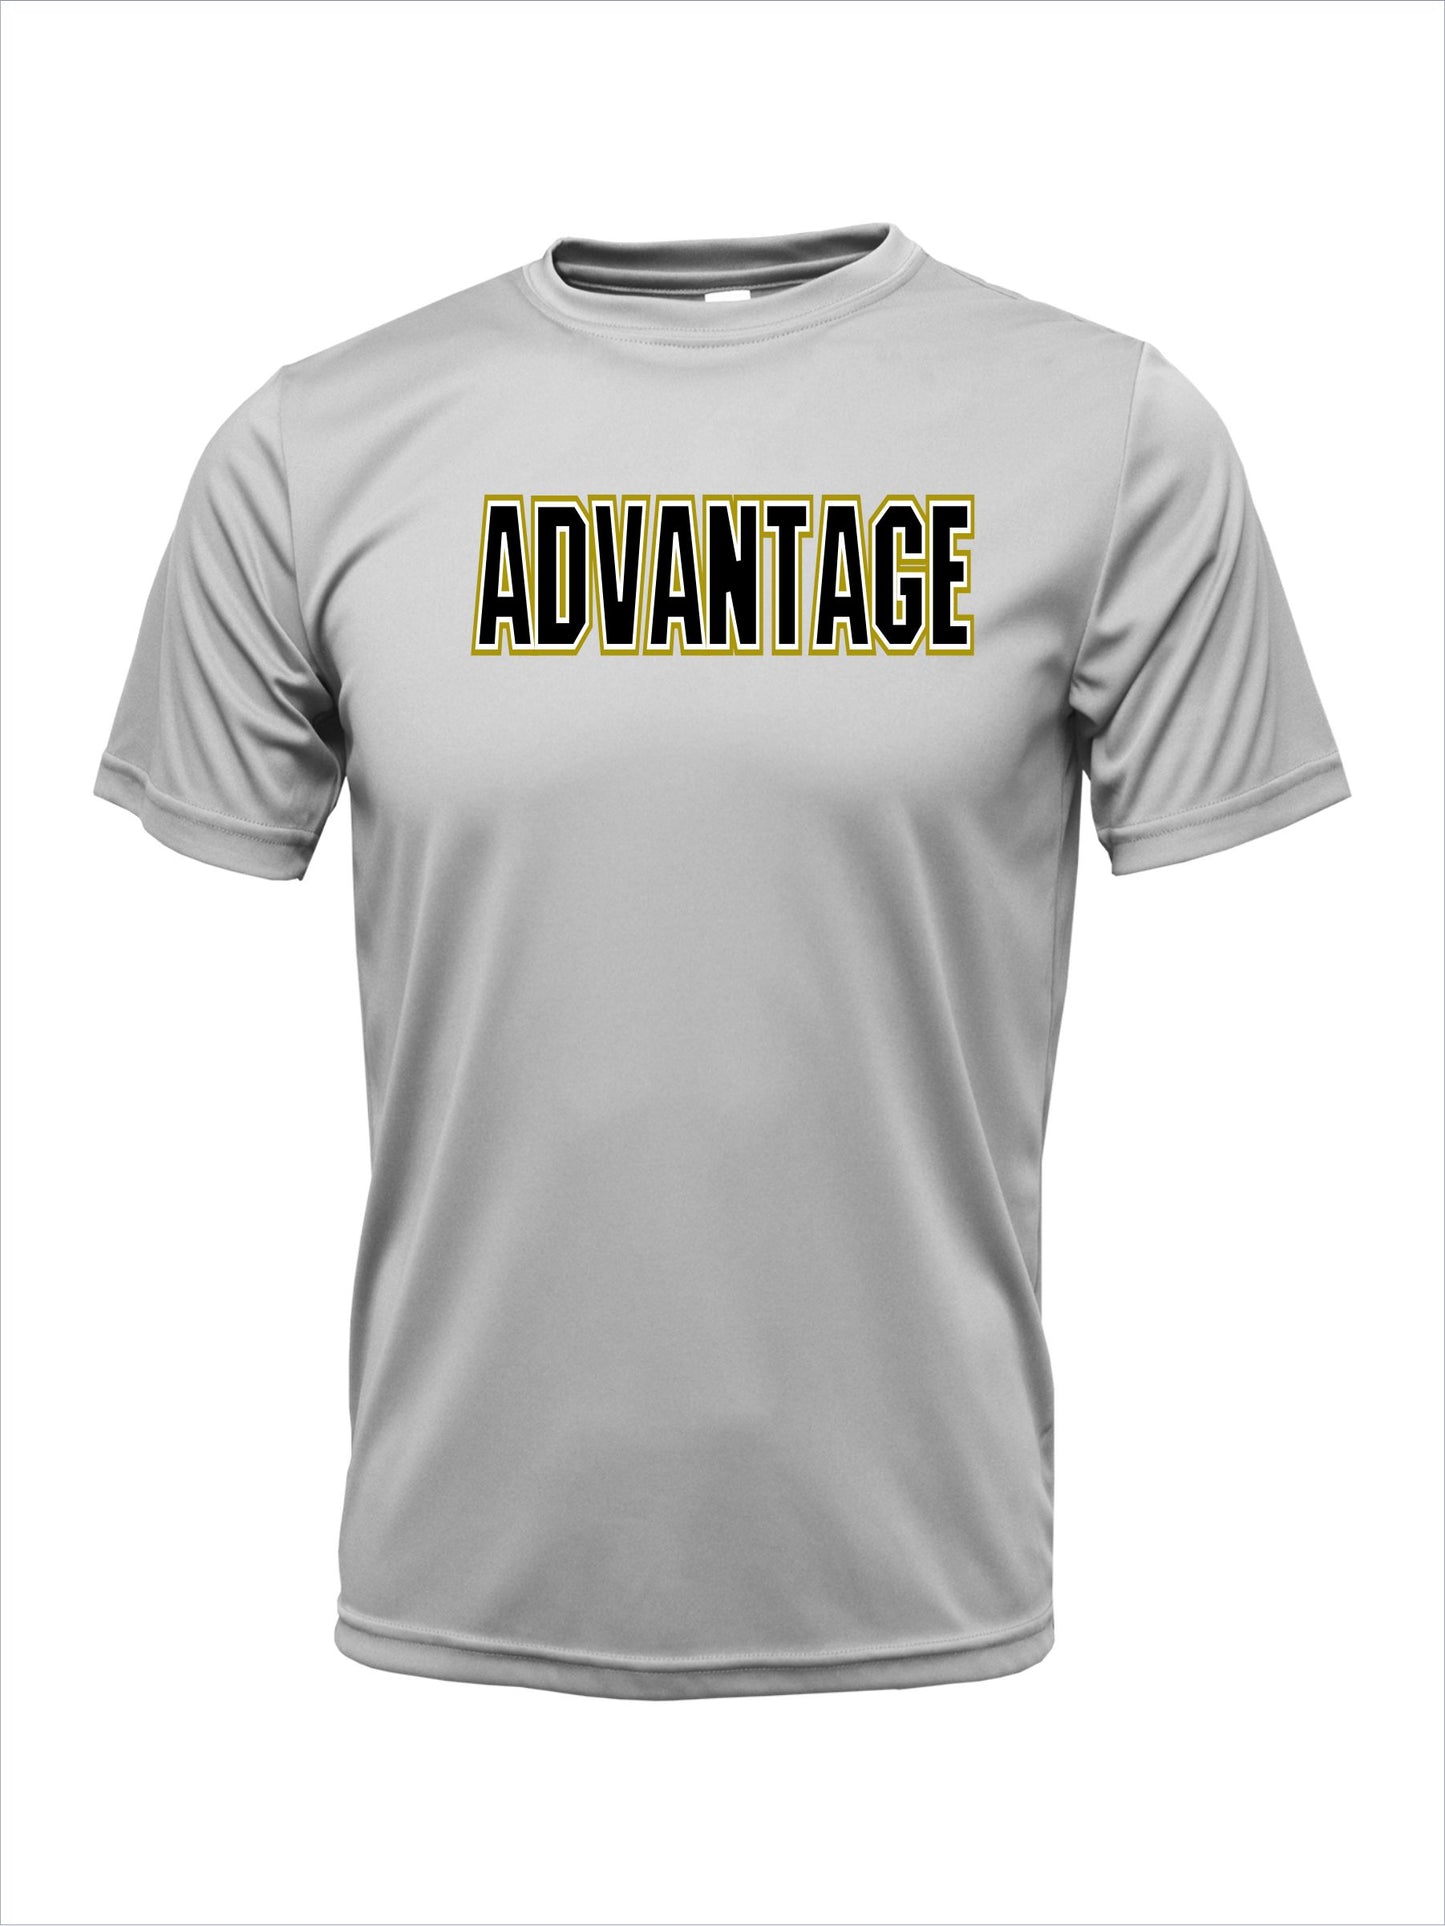 Short Sleeve "Advantage" Cotton T-Shirt